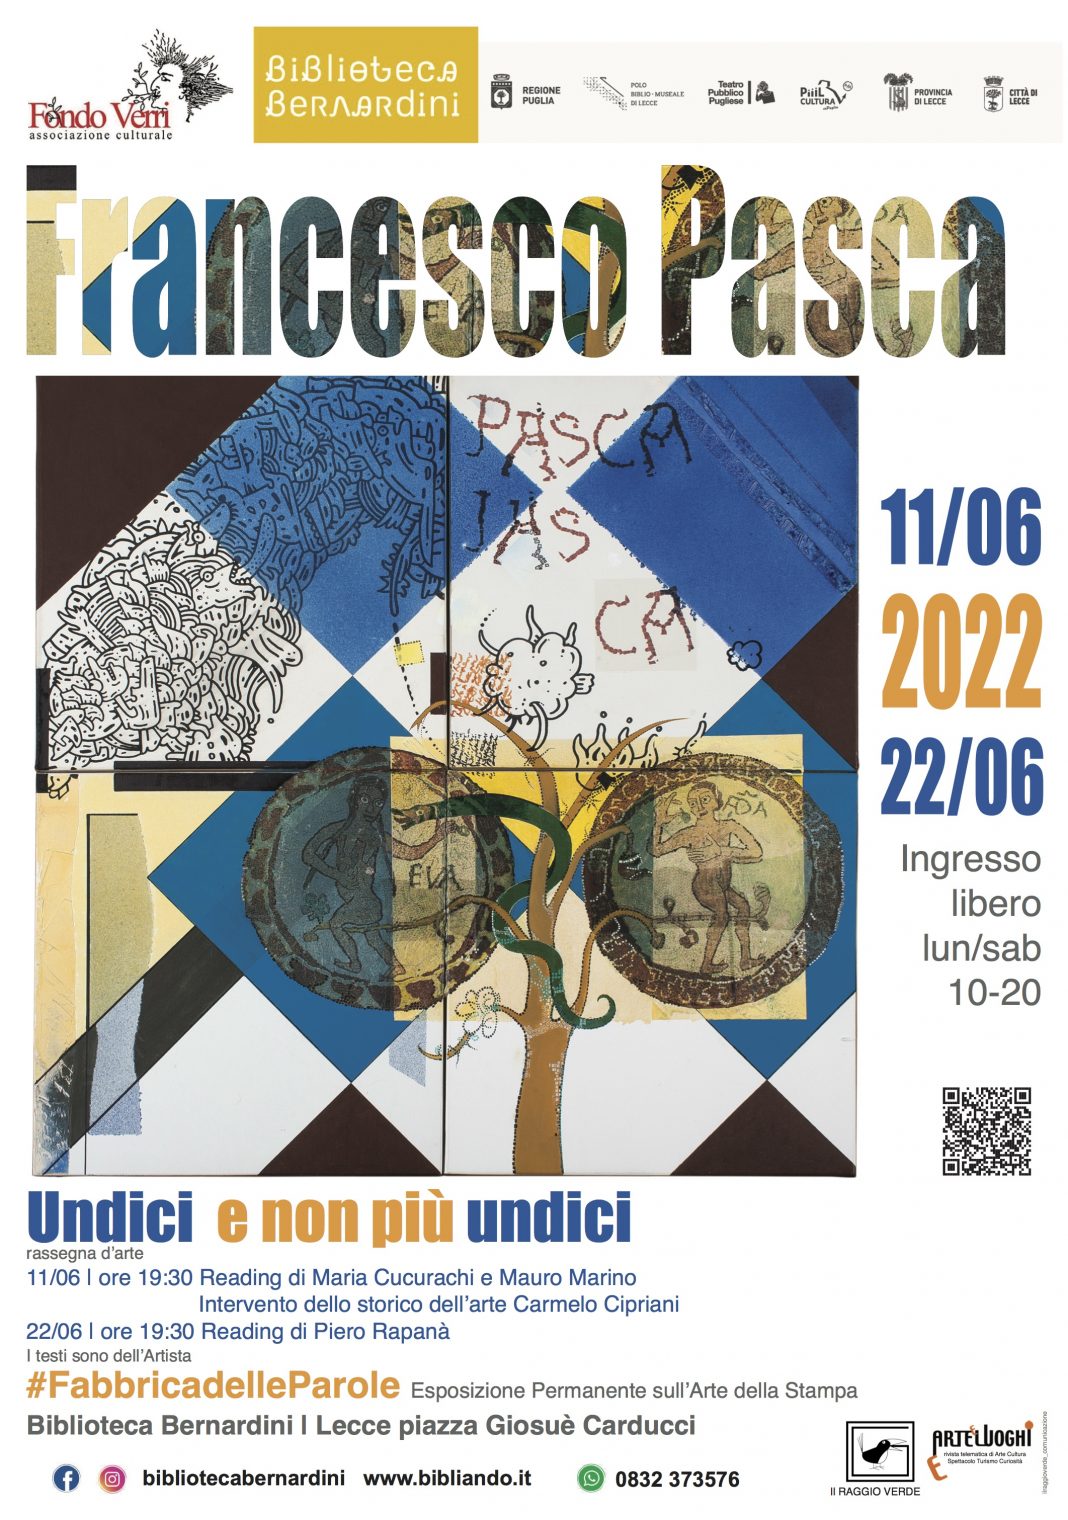 Francesco Pasca – Undici e non più undicihttps://www.exibart.com/repository/media/formidable/11/img/ead/manfiesto-francescoqr-1068x1520.jpg